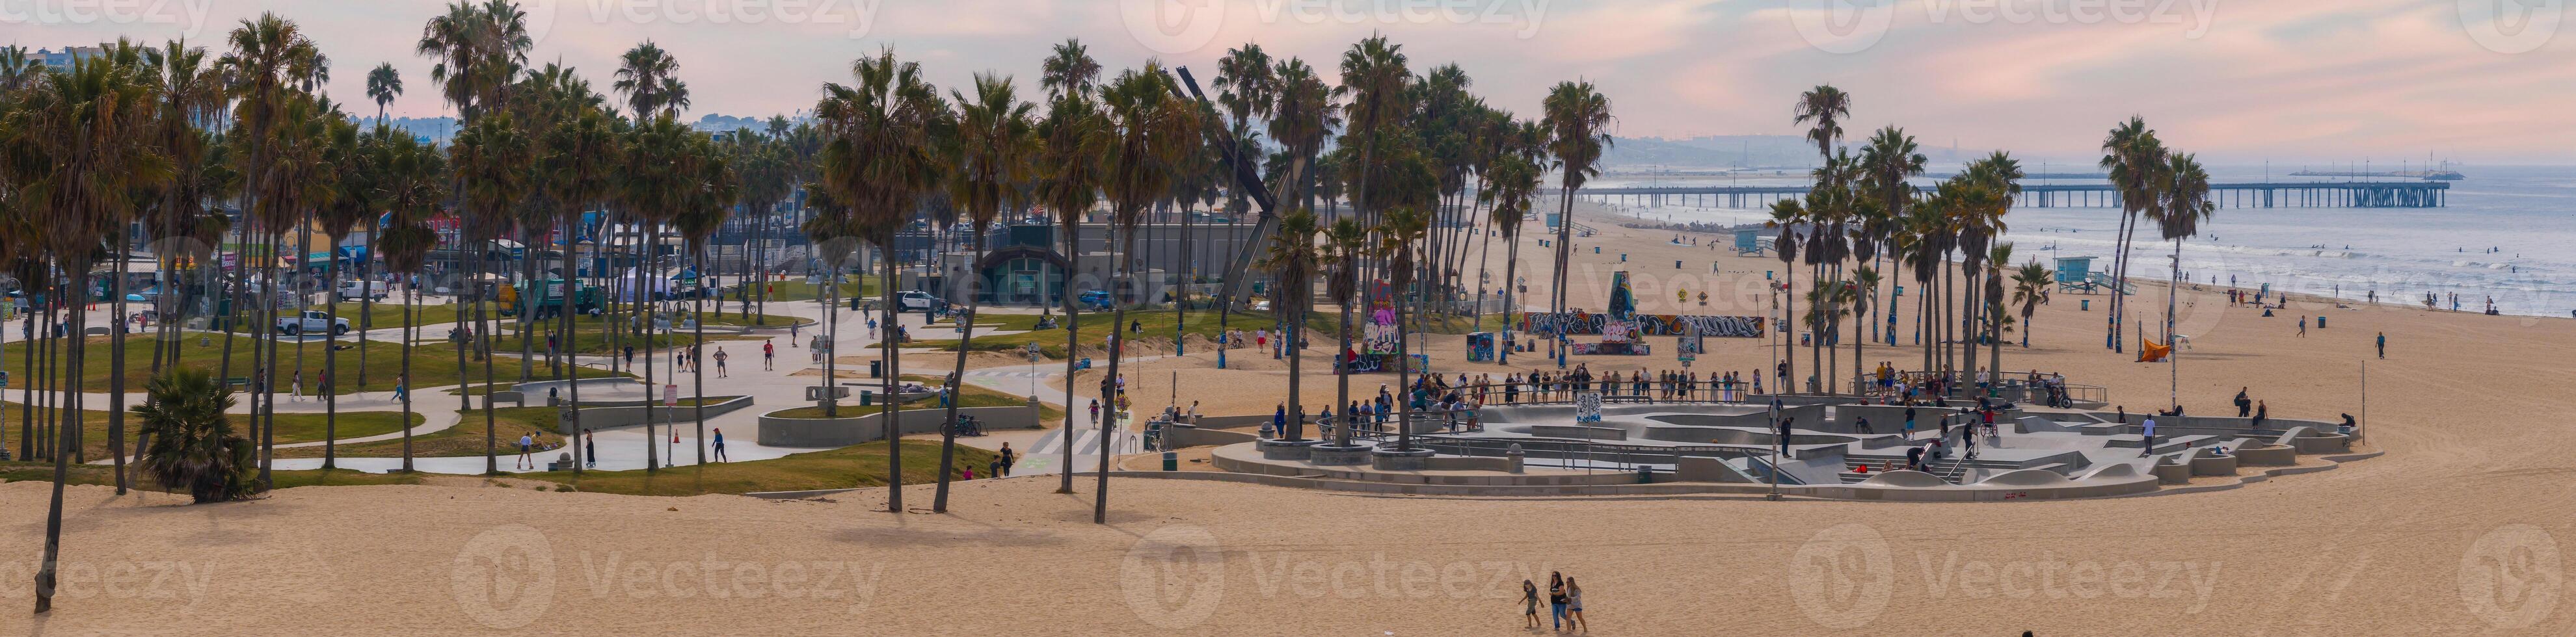 Skate board park in Venice beach at sunset, California, USA photo